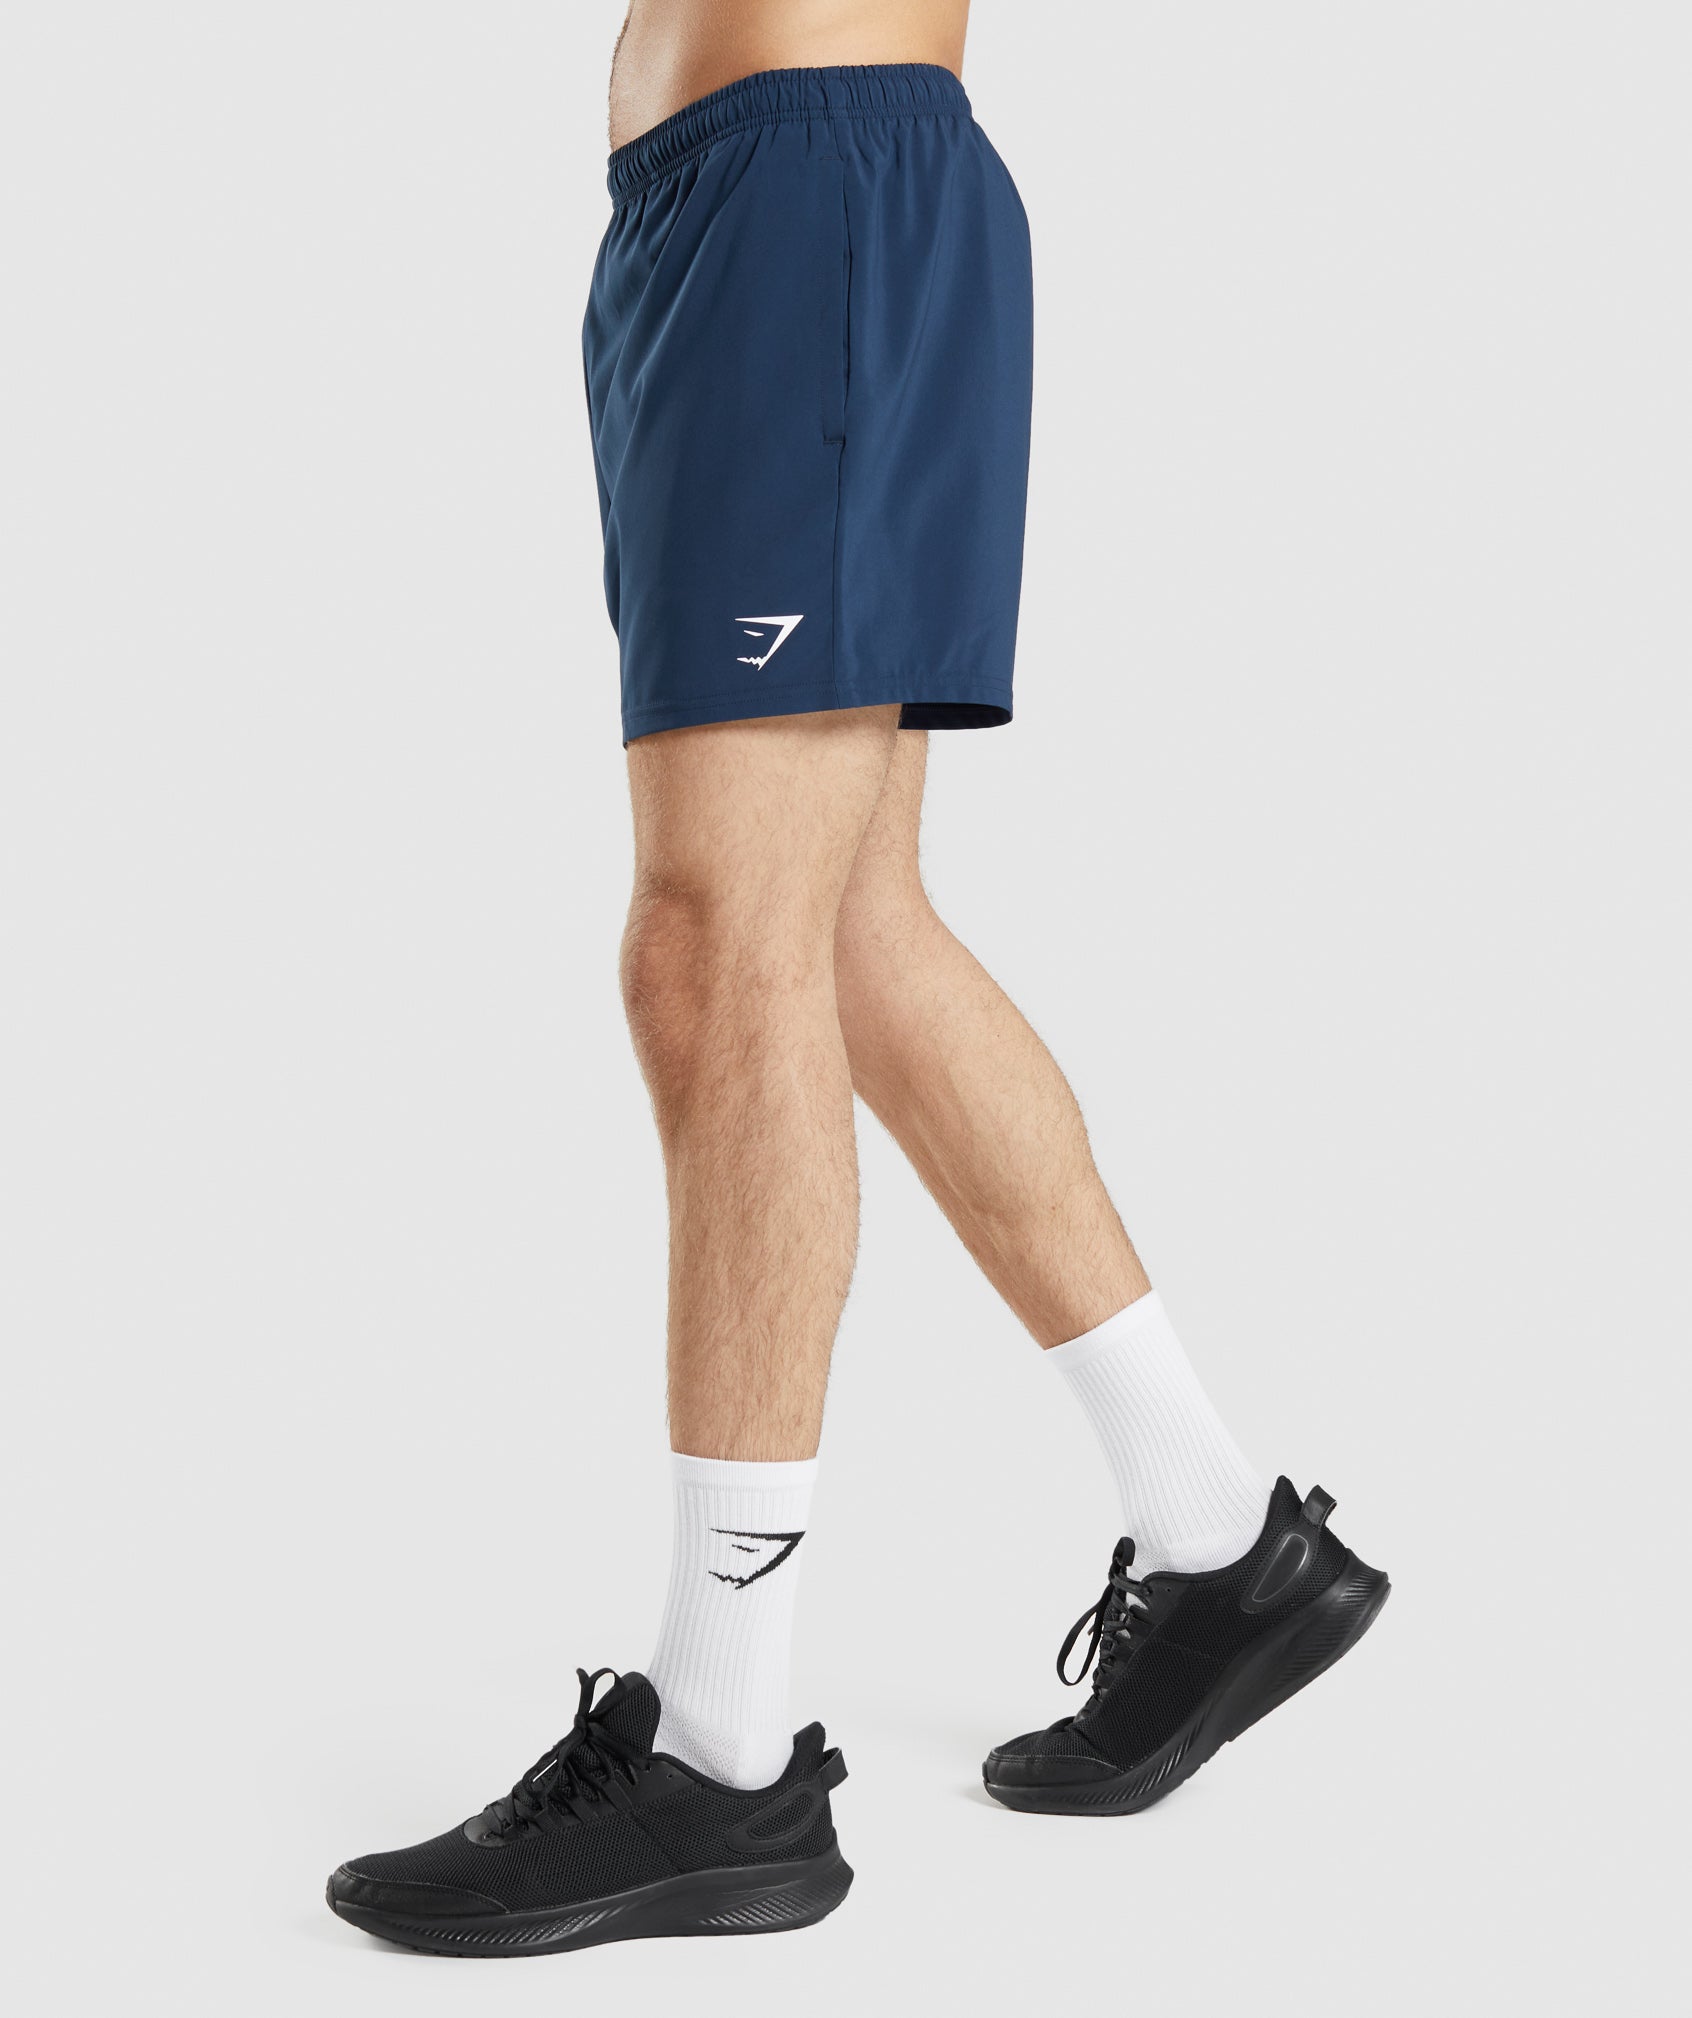 NEW Gymshark Men's Arrival 7” Teal Athletic Shorts, Size XL